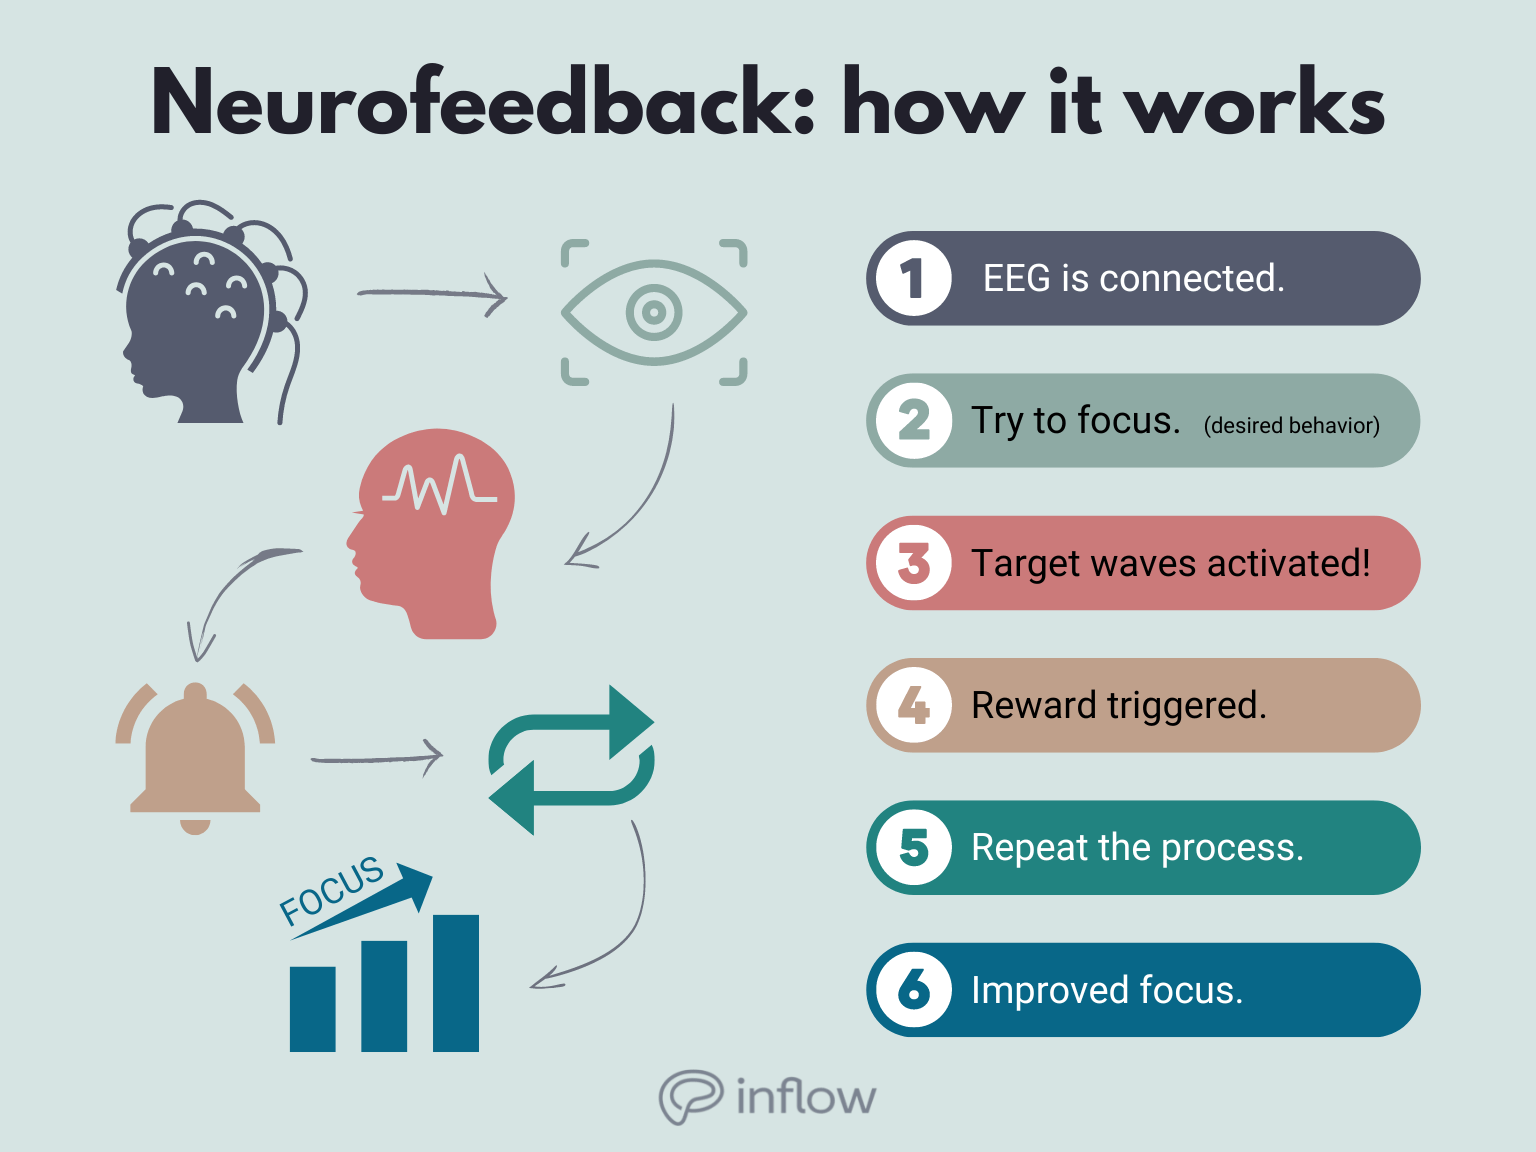 neurofeedback: how it works: step 1, eeg is connected. step 2, try to focus - desired behavior. Step 3, target waves activated! step 4, reward triggered. Step 5 repeat. step 6, focus is improved.